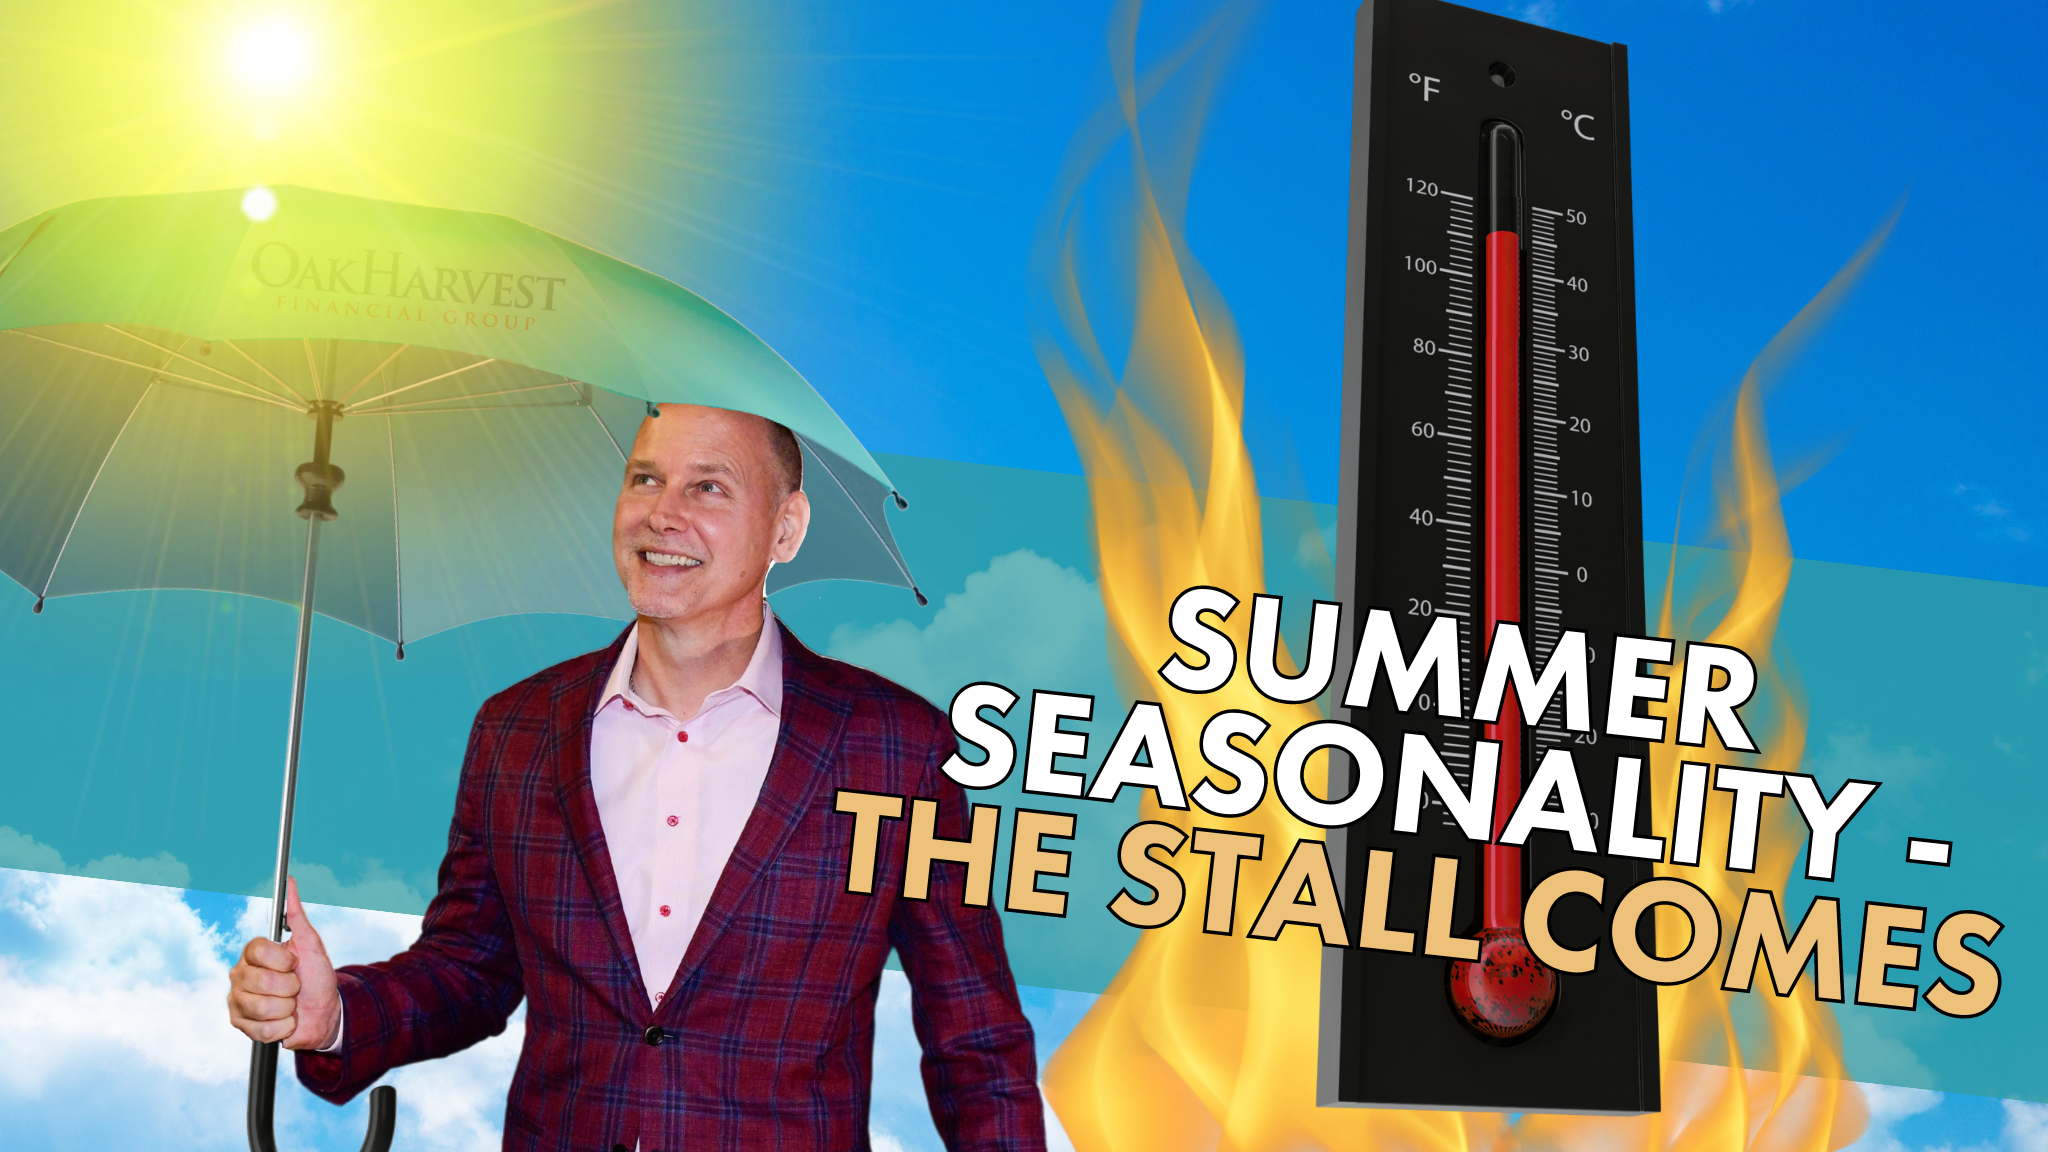 Summer Seasonality - The Stall Comes